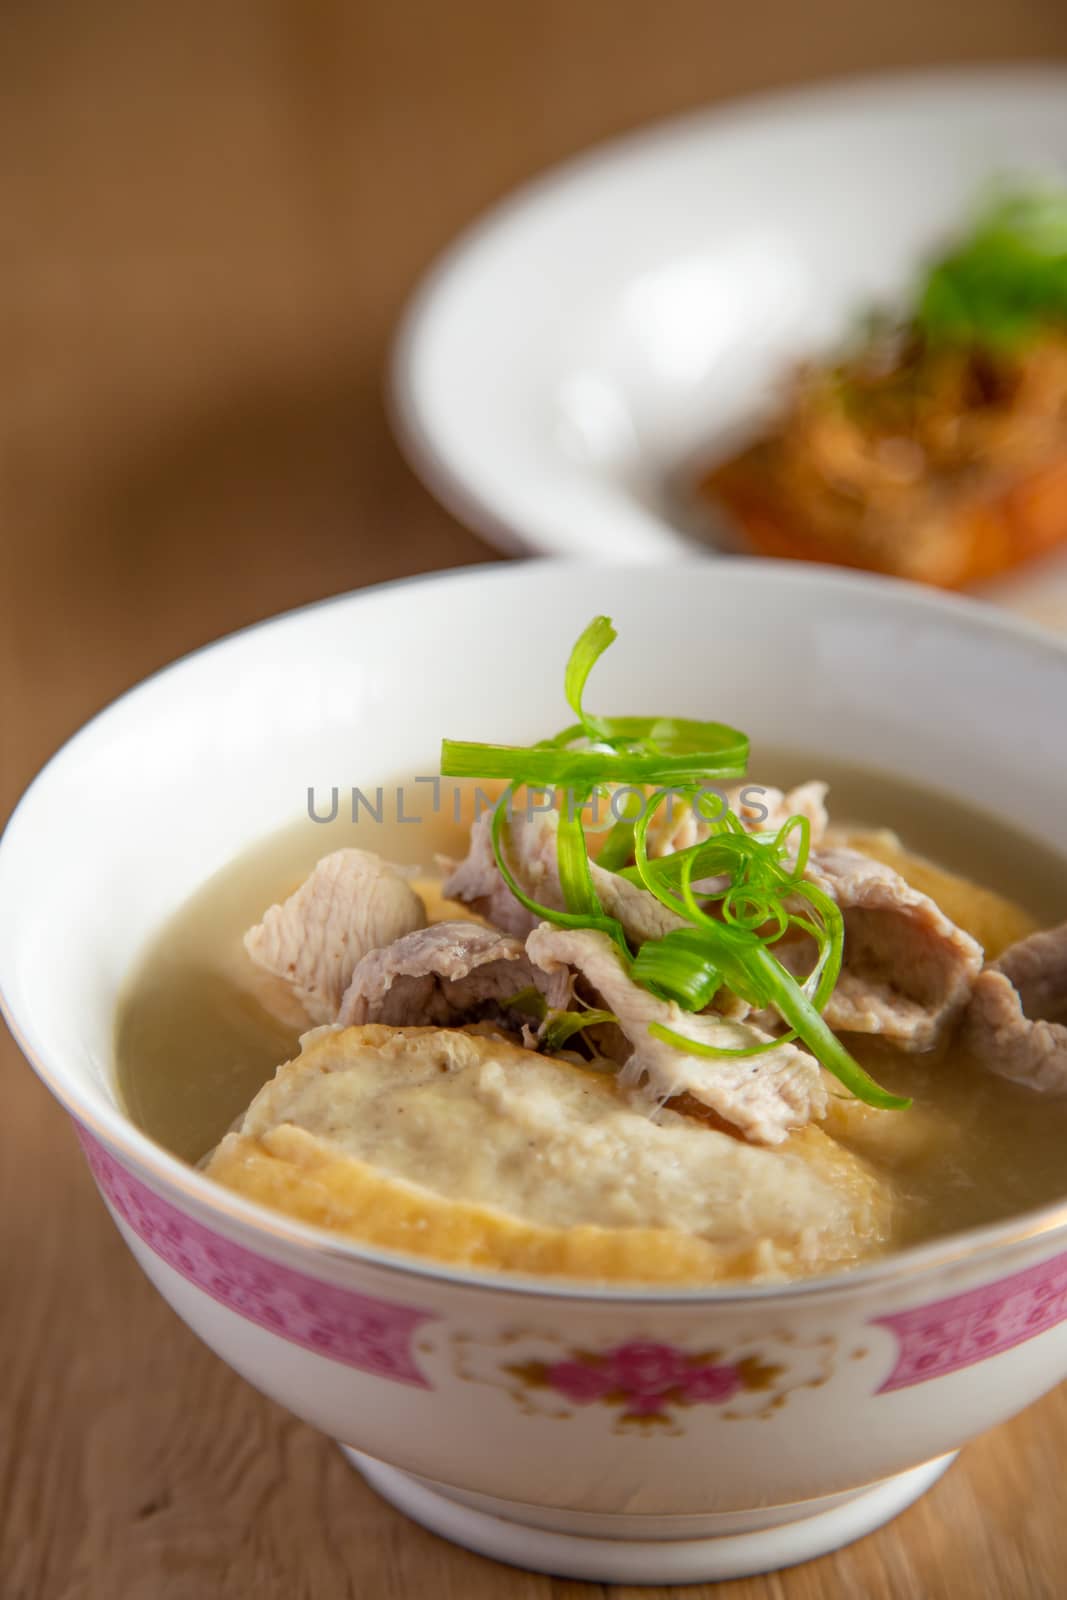 Pork soup tofu by tehcheesiong